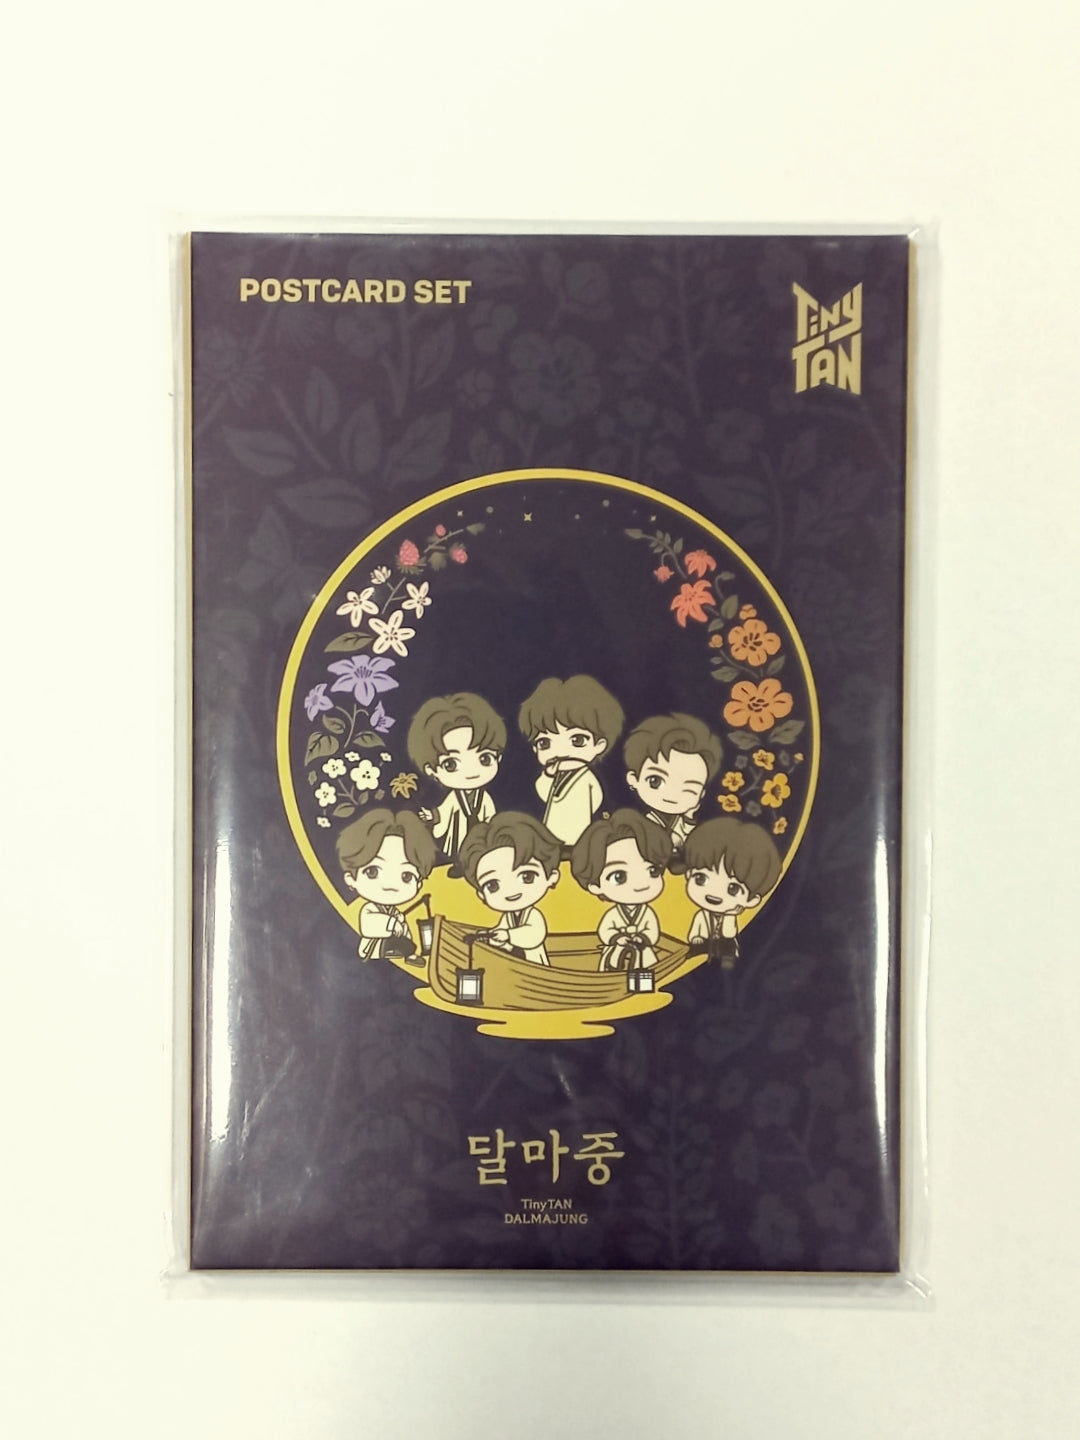 BTS - Tiny "Dalmajung" - Postcard Set